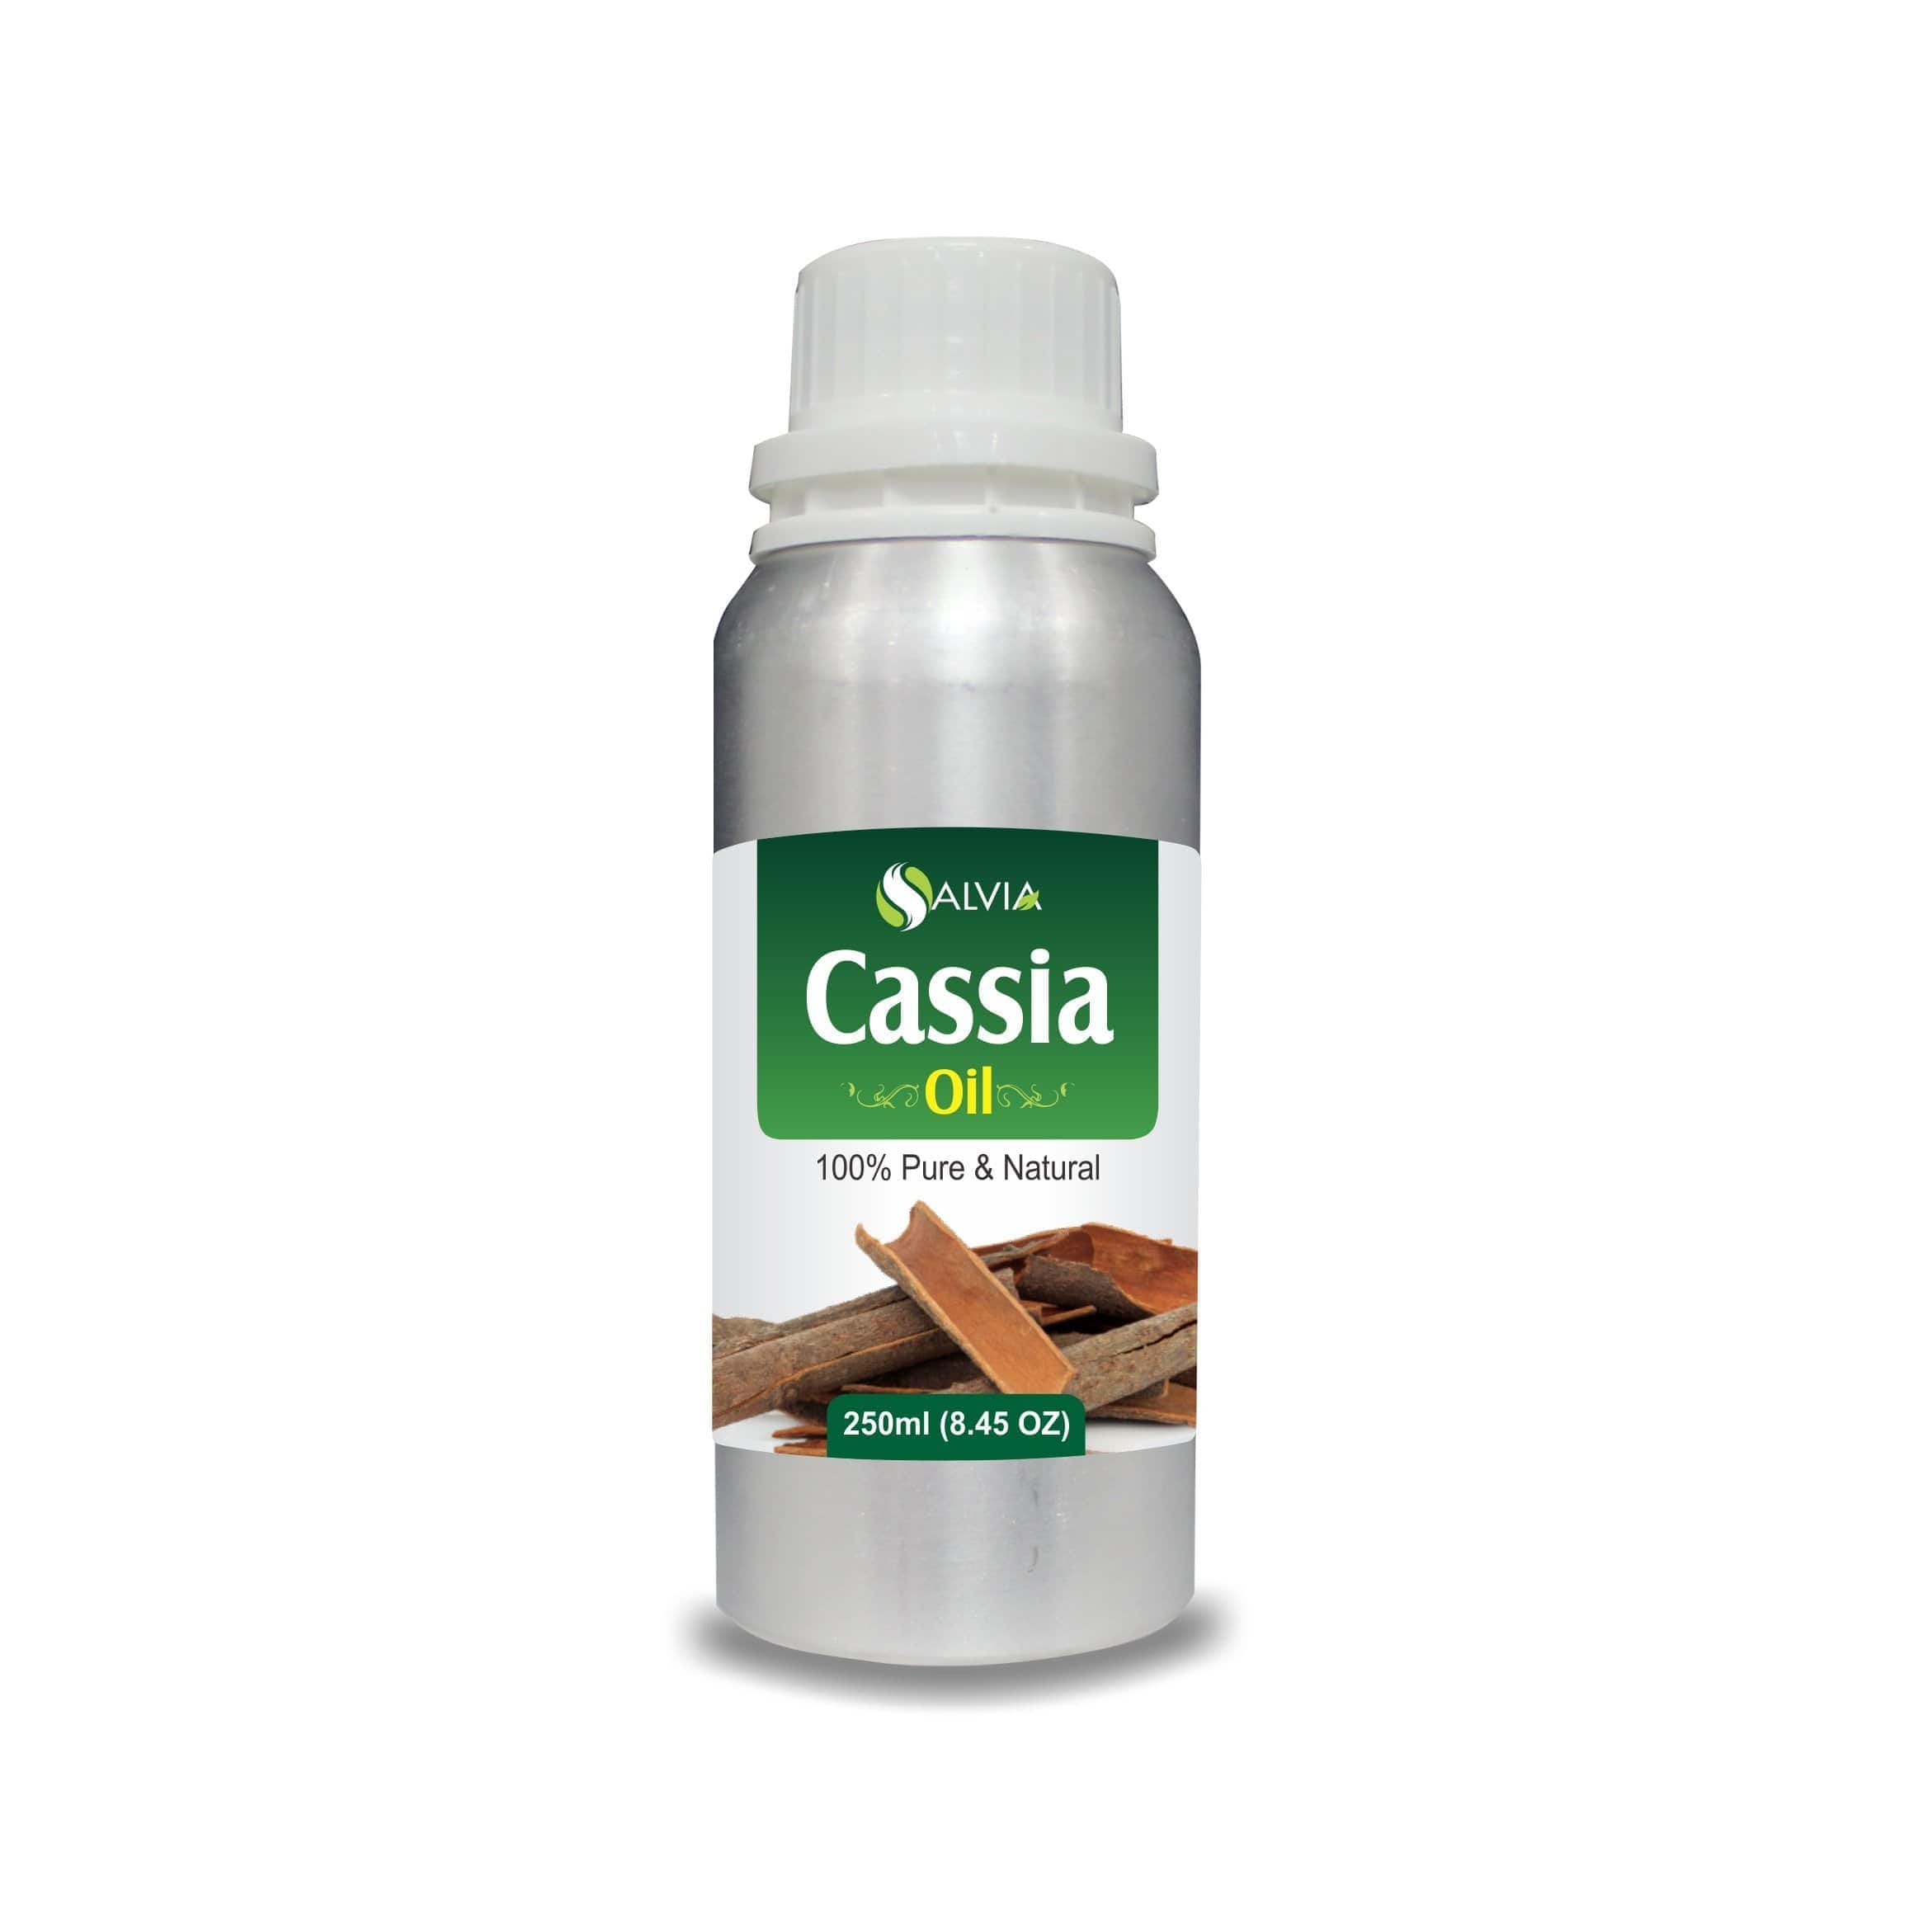 cassia oil for hair